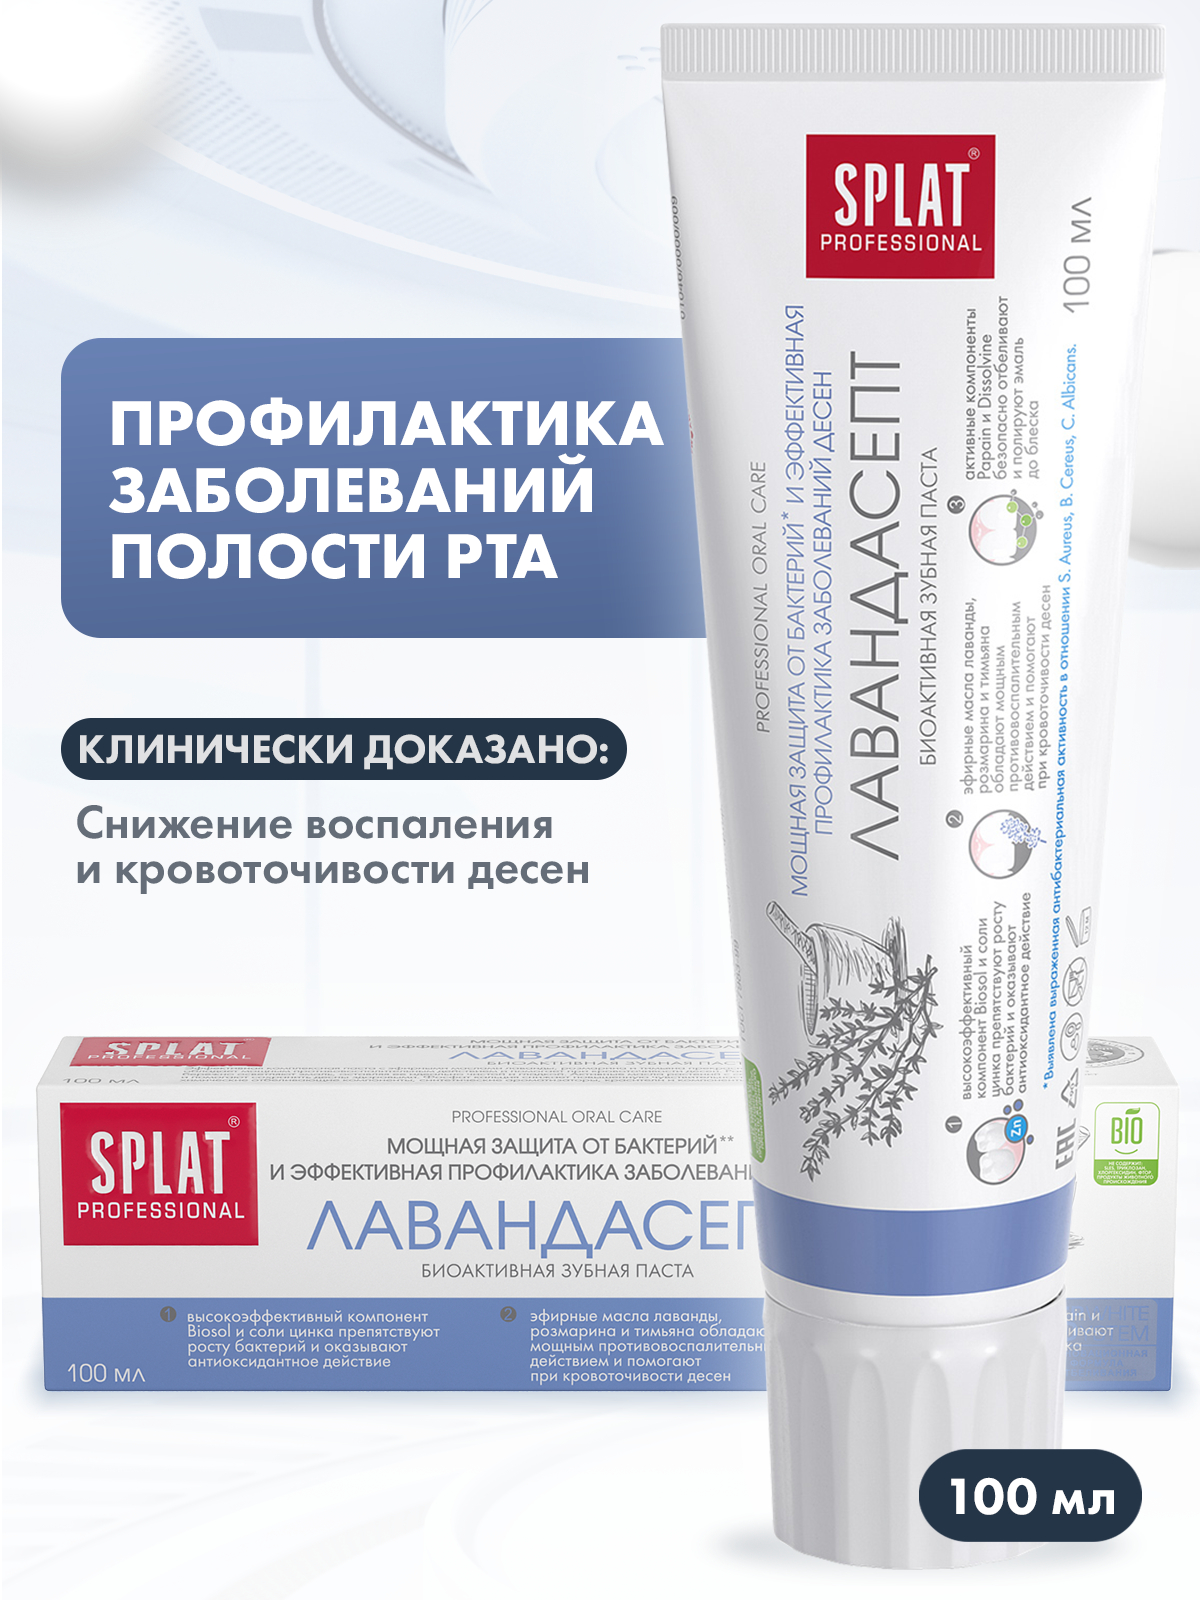 Зубная паста SPLAT Professional Лавандасепт 100 мл splat зубная паста organic